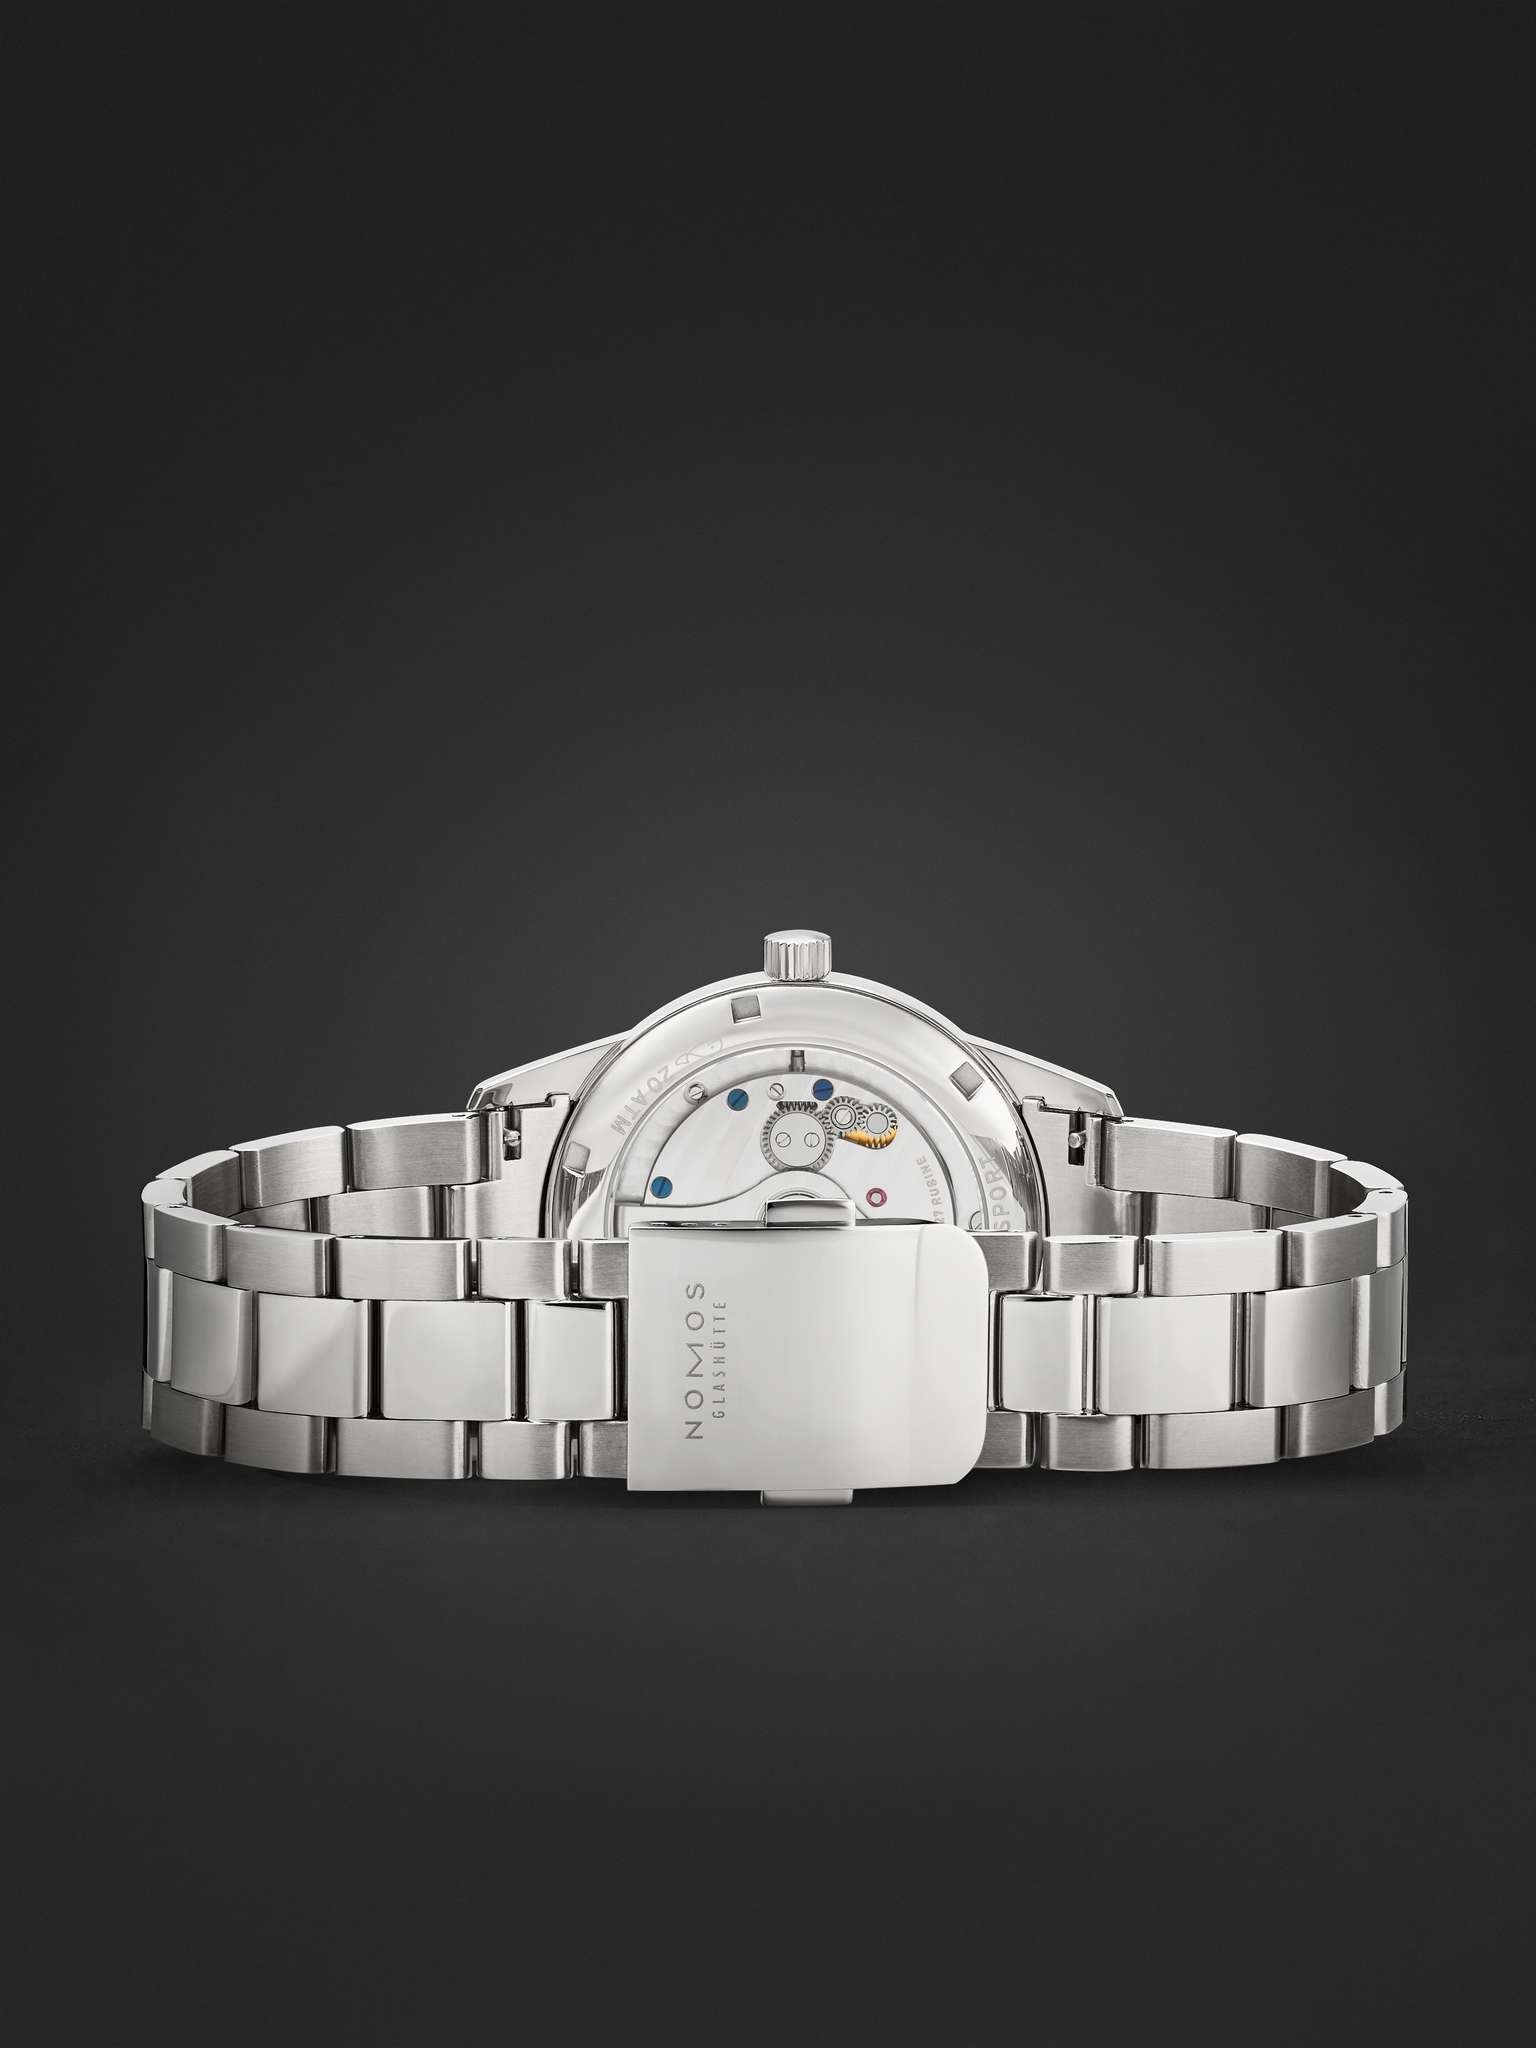 Club Sport Neomatik Automatic 37mm Stainless Steel Watch, Ref. No. 750 - 4